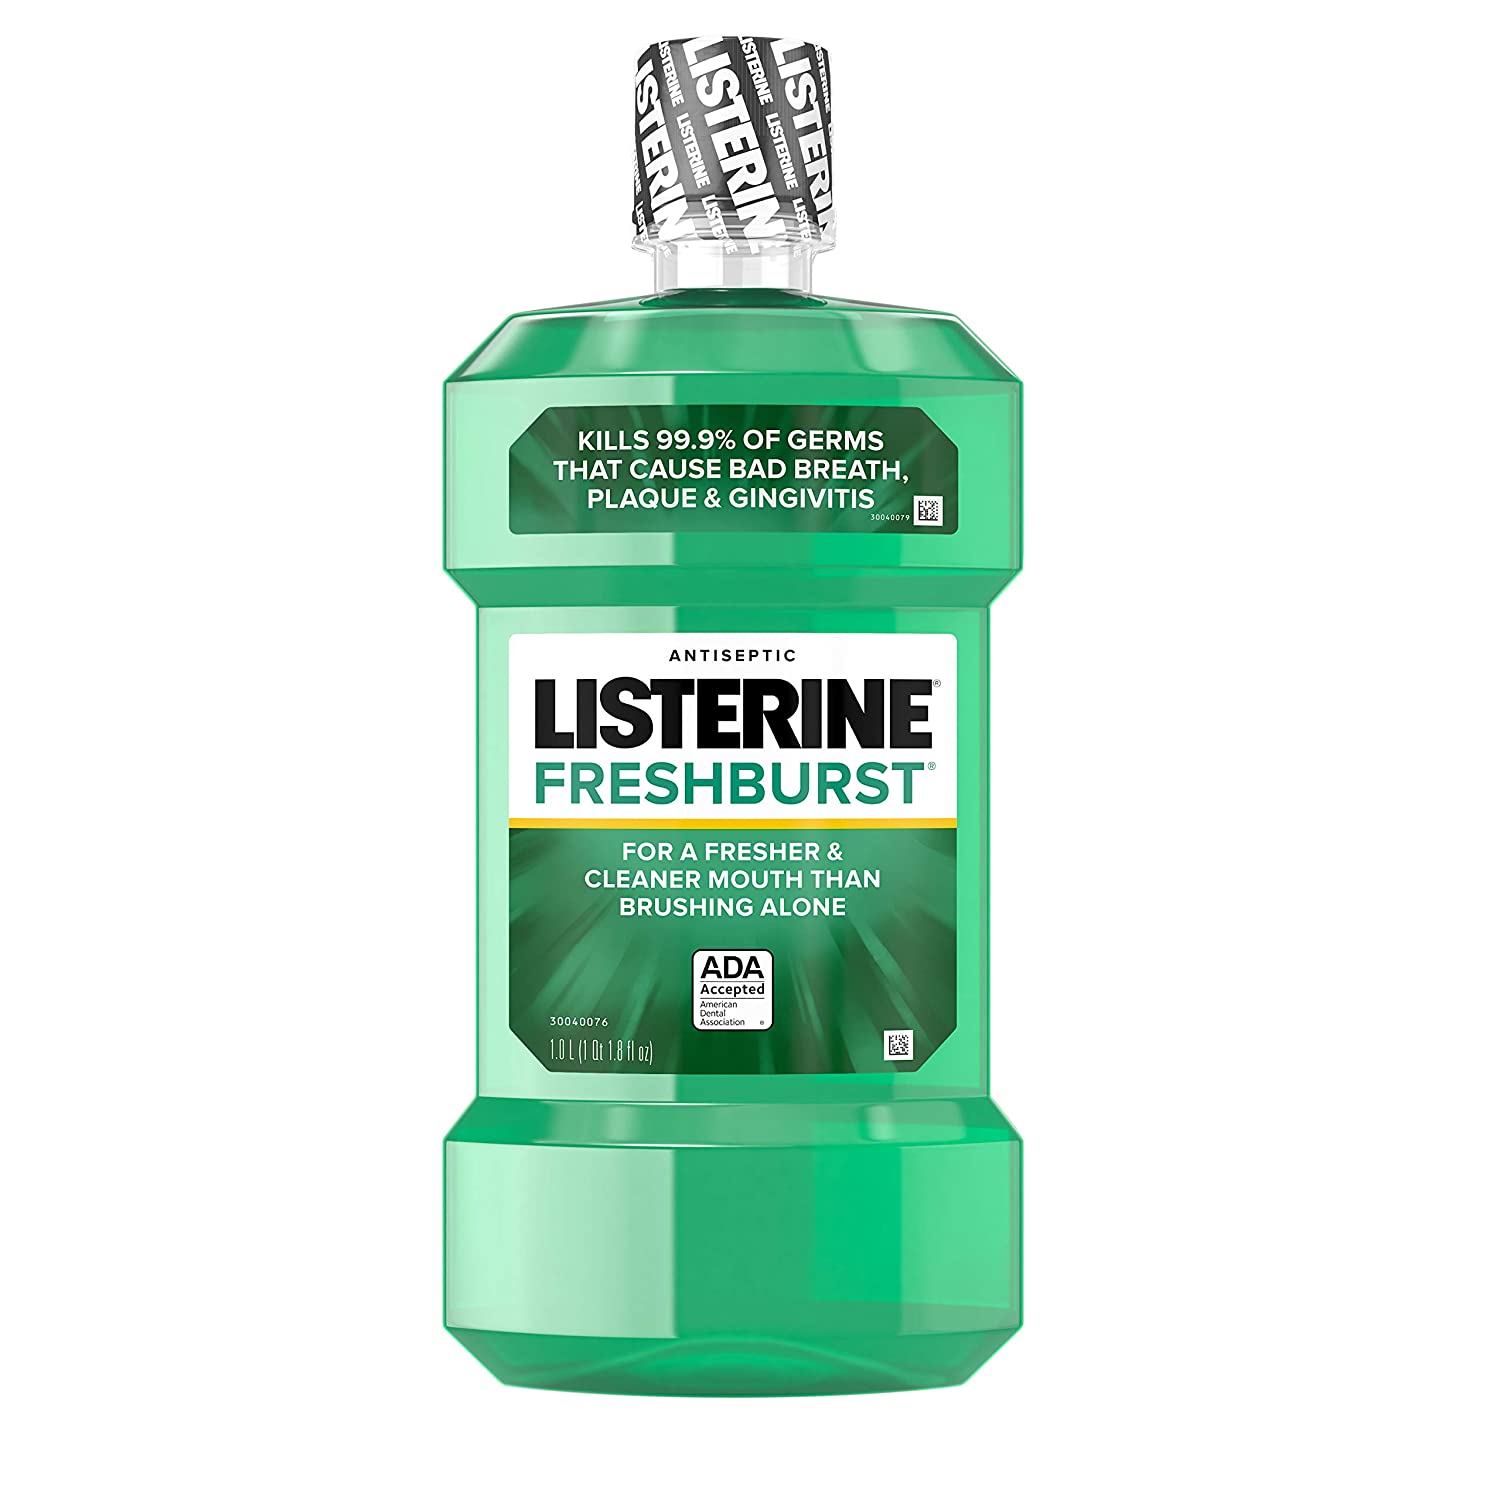 Listerine Antiseptic Mouthwash, Fresh Burst - One Liter (33.8 Fl Oz) - $3.64 AC & S&S ($3.08 @ 5 S&S Orders) - Amazon